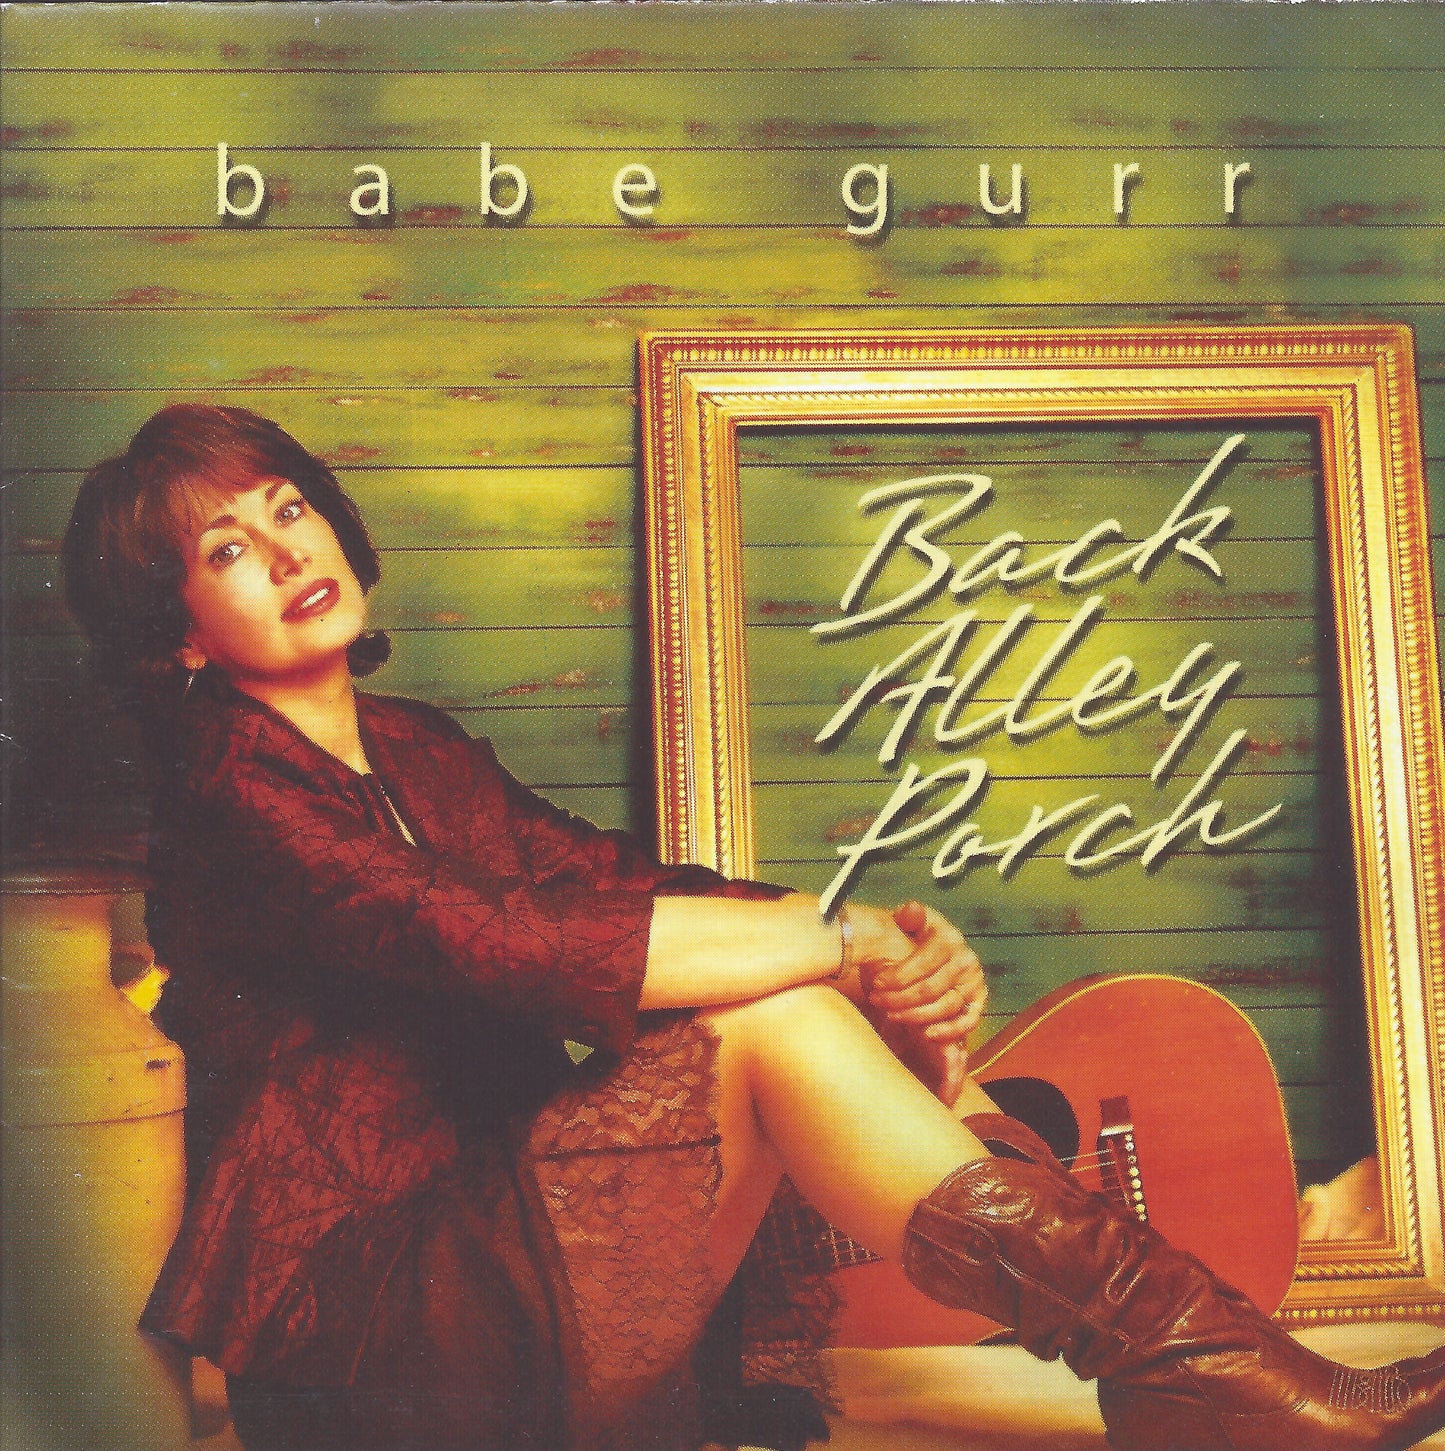 Babe Gurr - Back Alley Porch CD